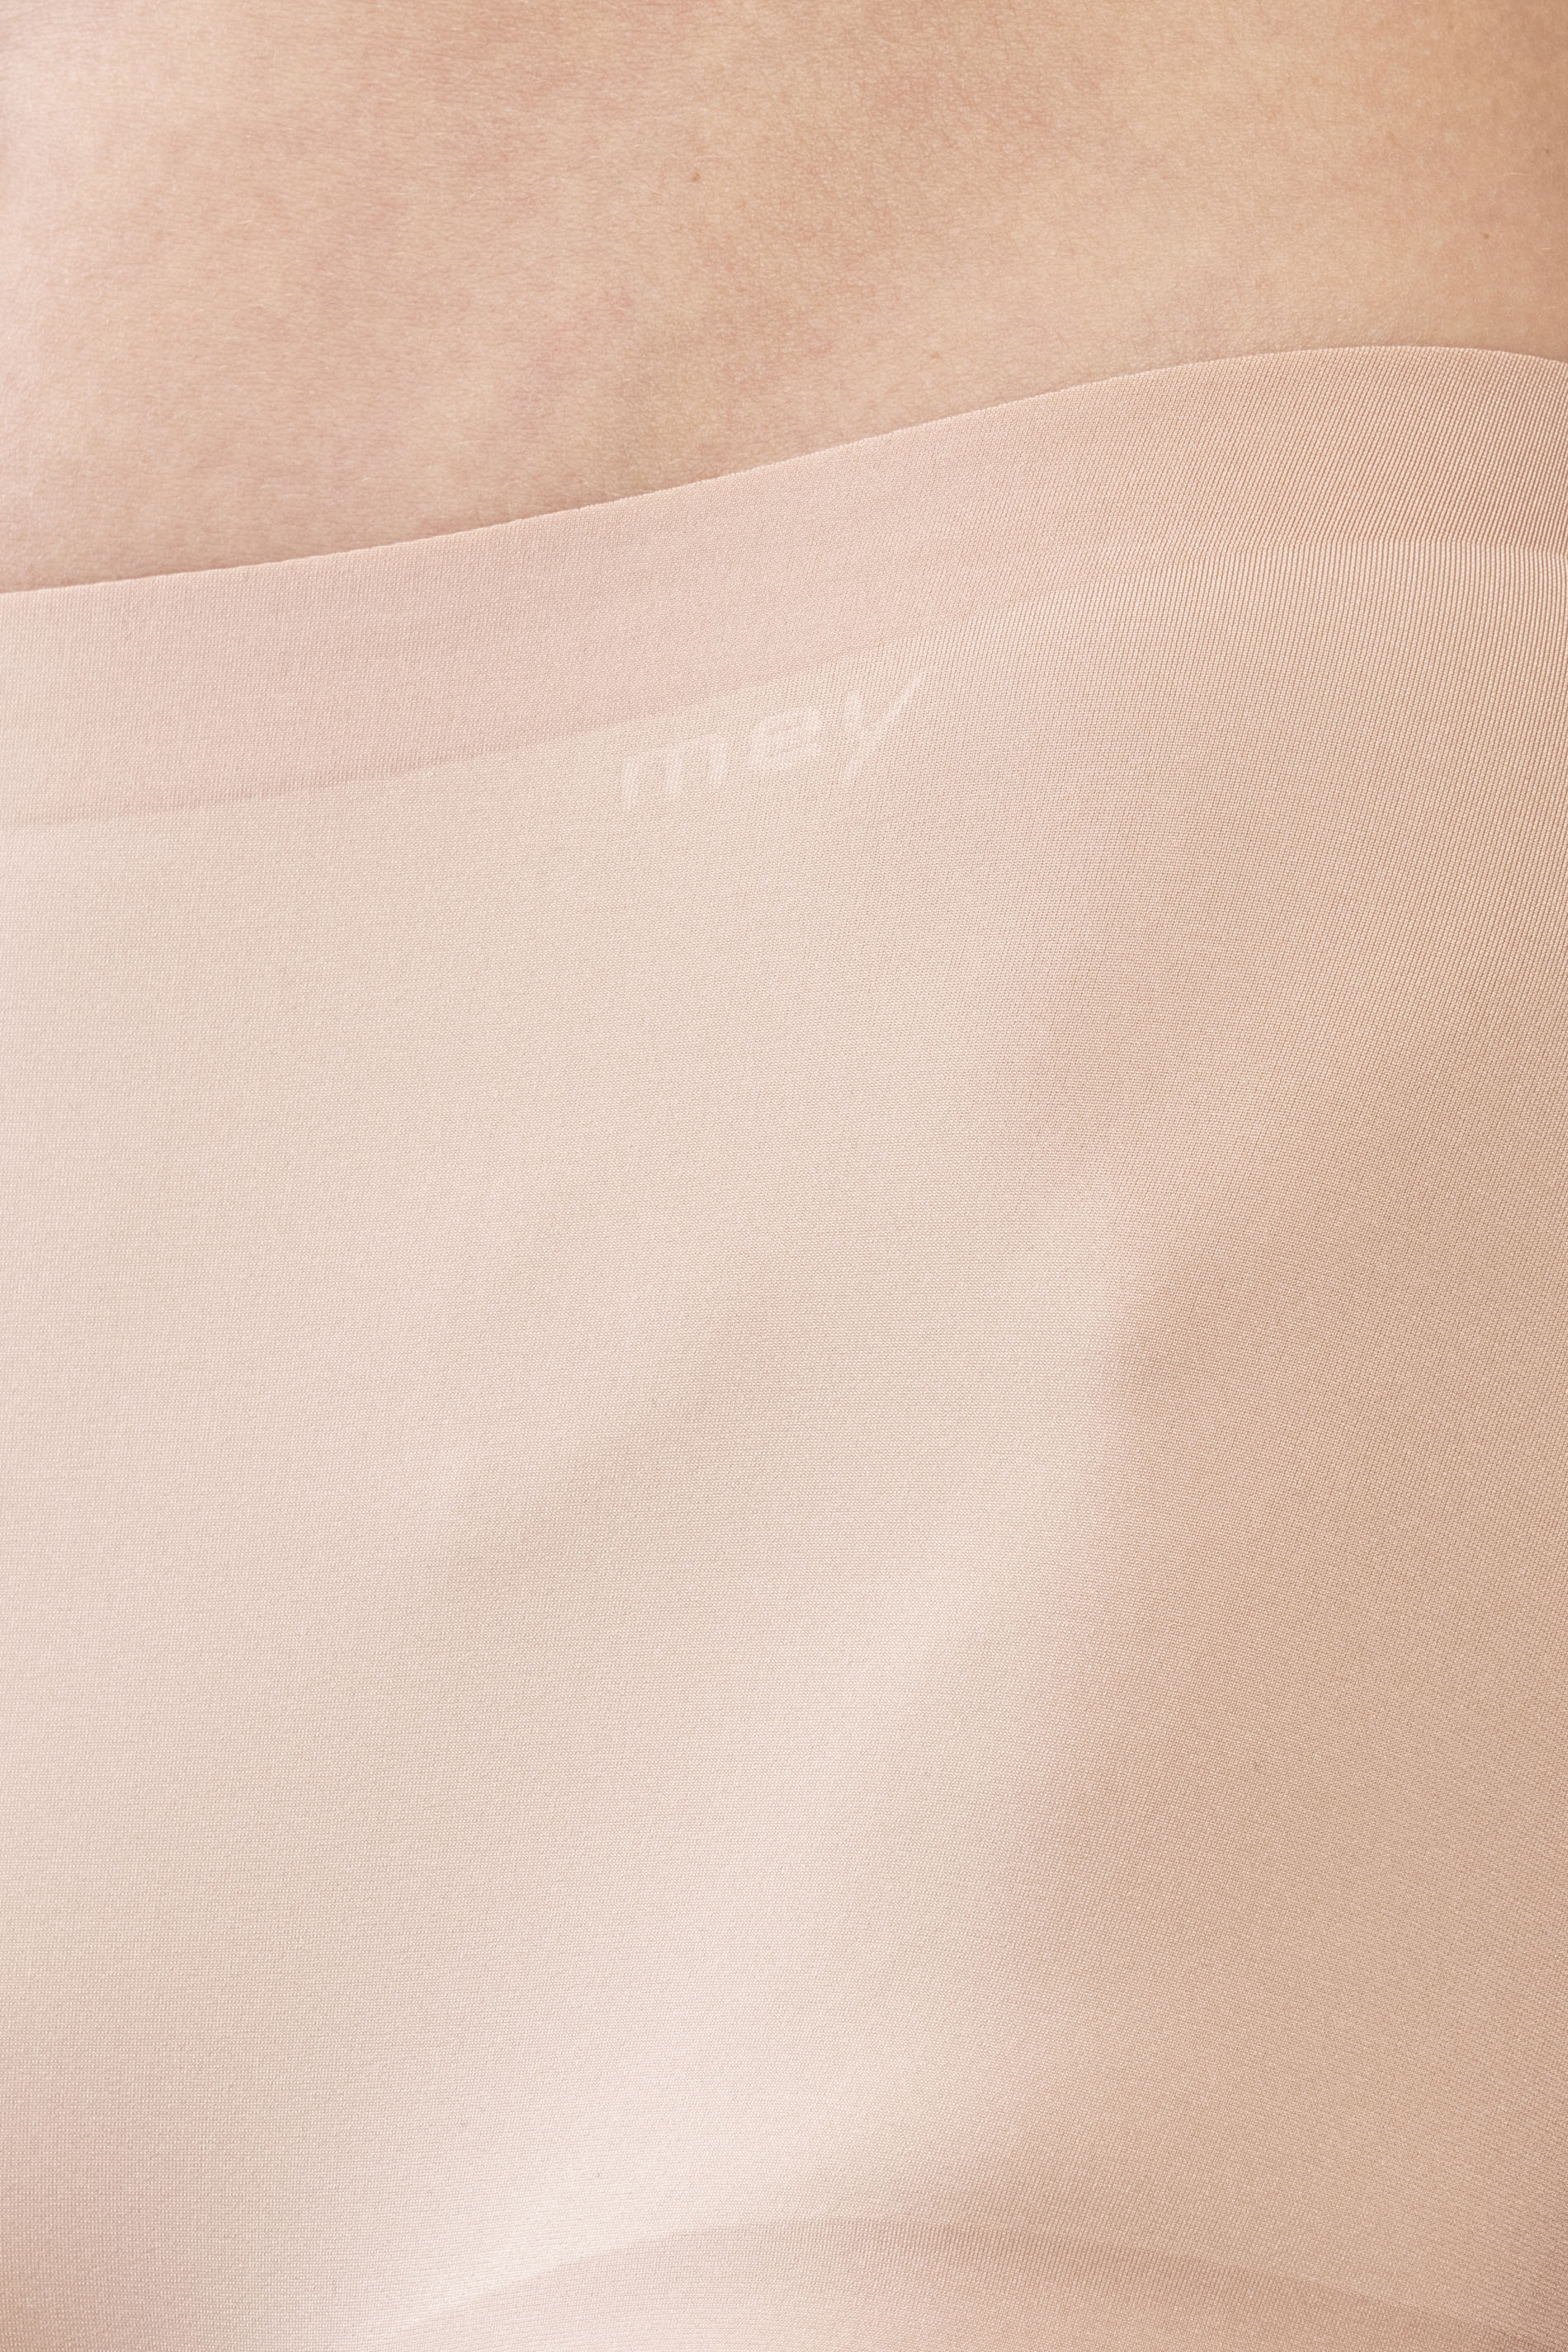 Panty Cream Tan Serie Illusion Detailansicht 01 | mey®